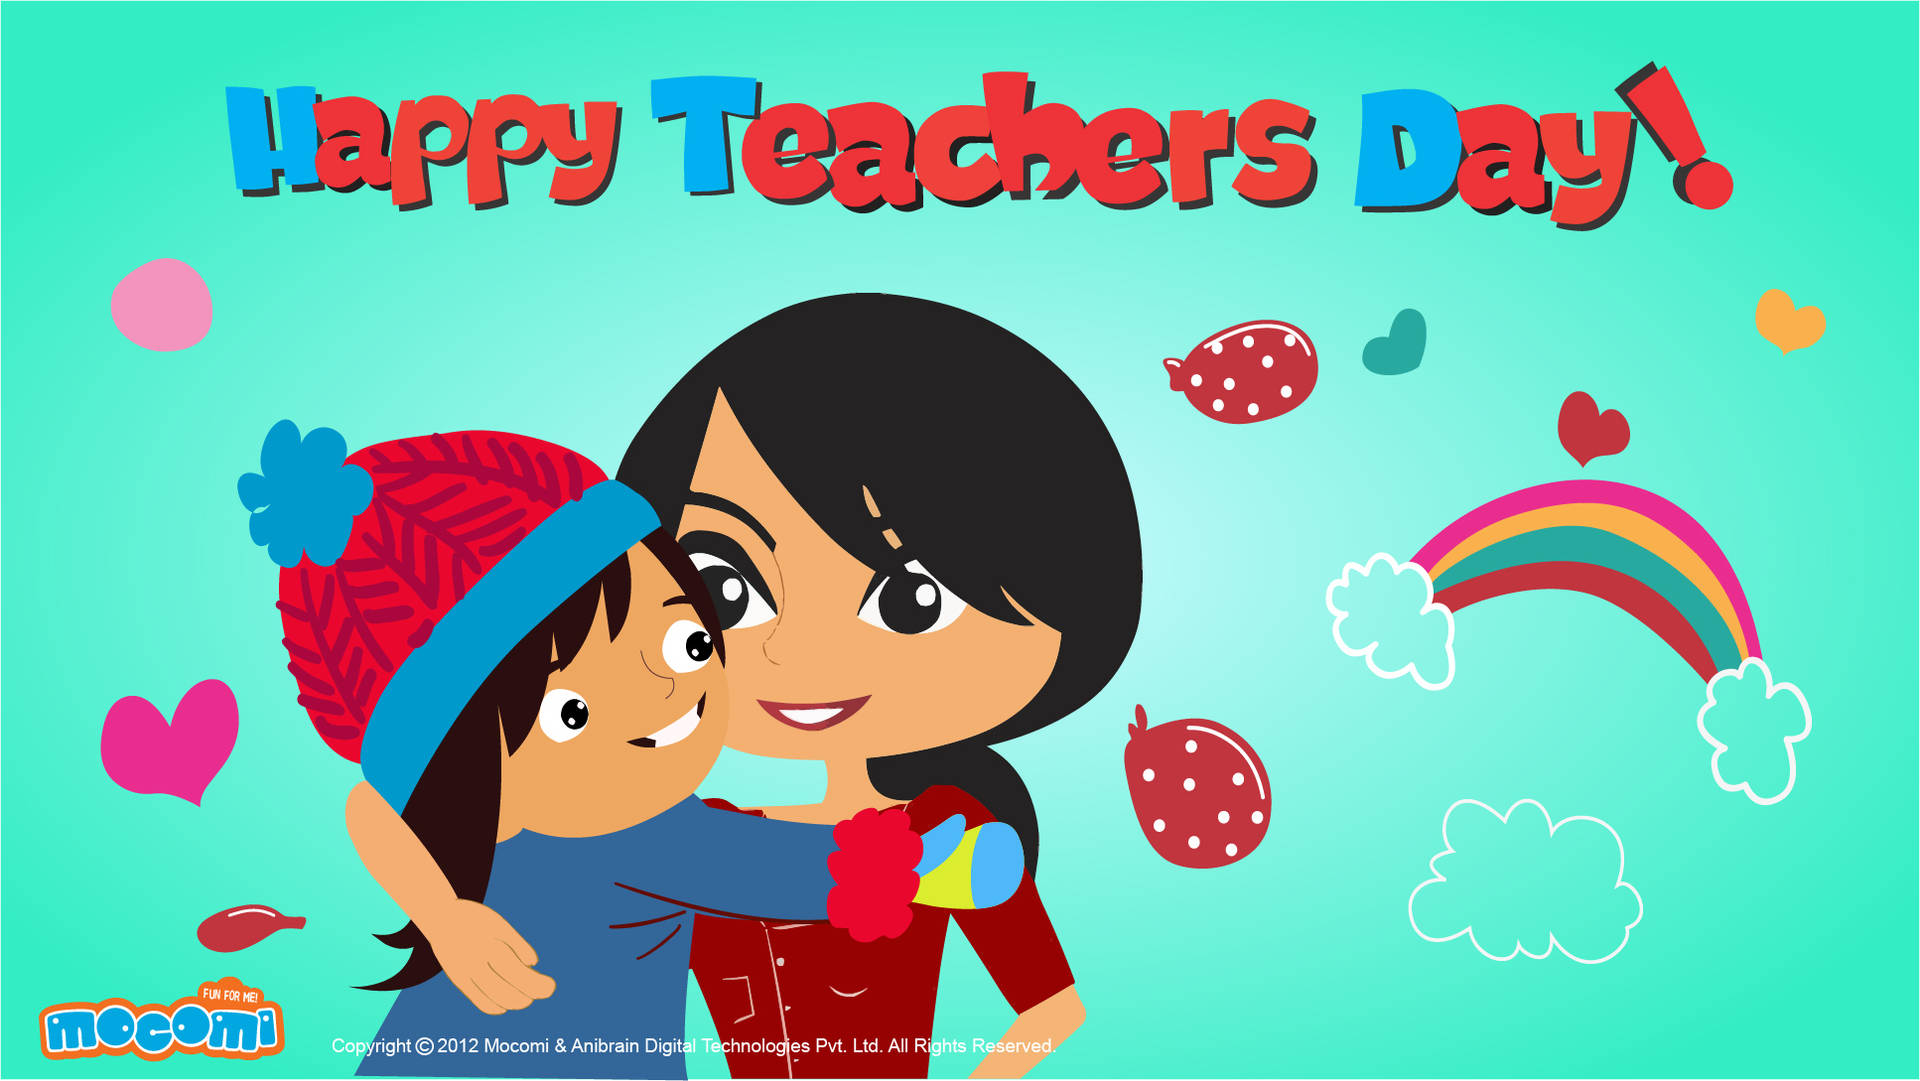 Celebrating Education: Happy Teachers Day